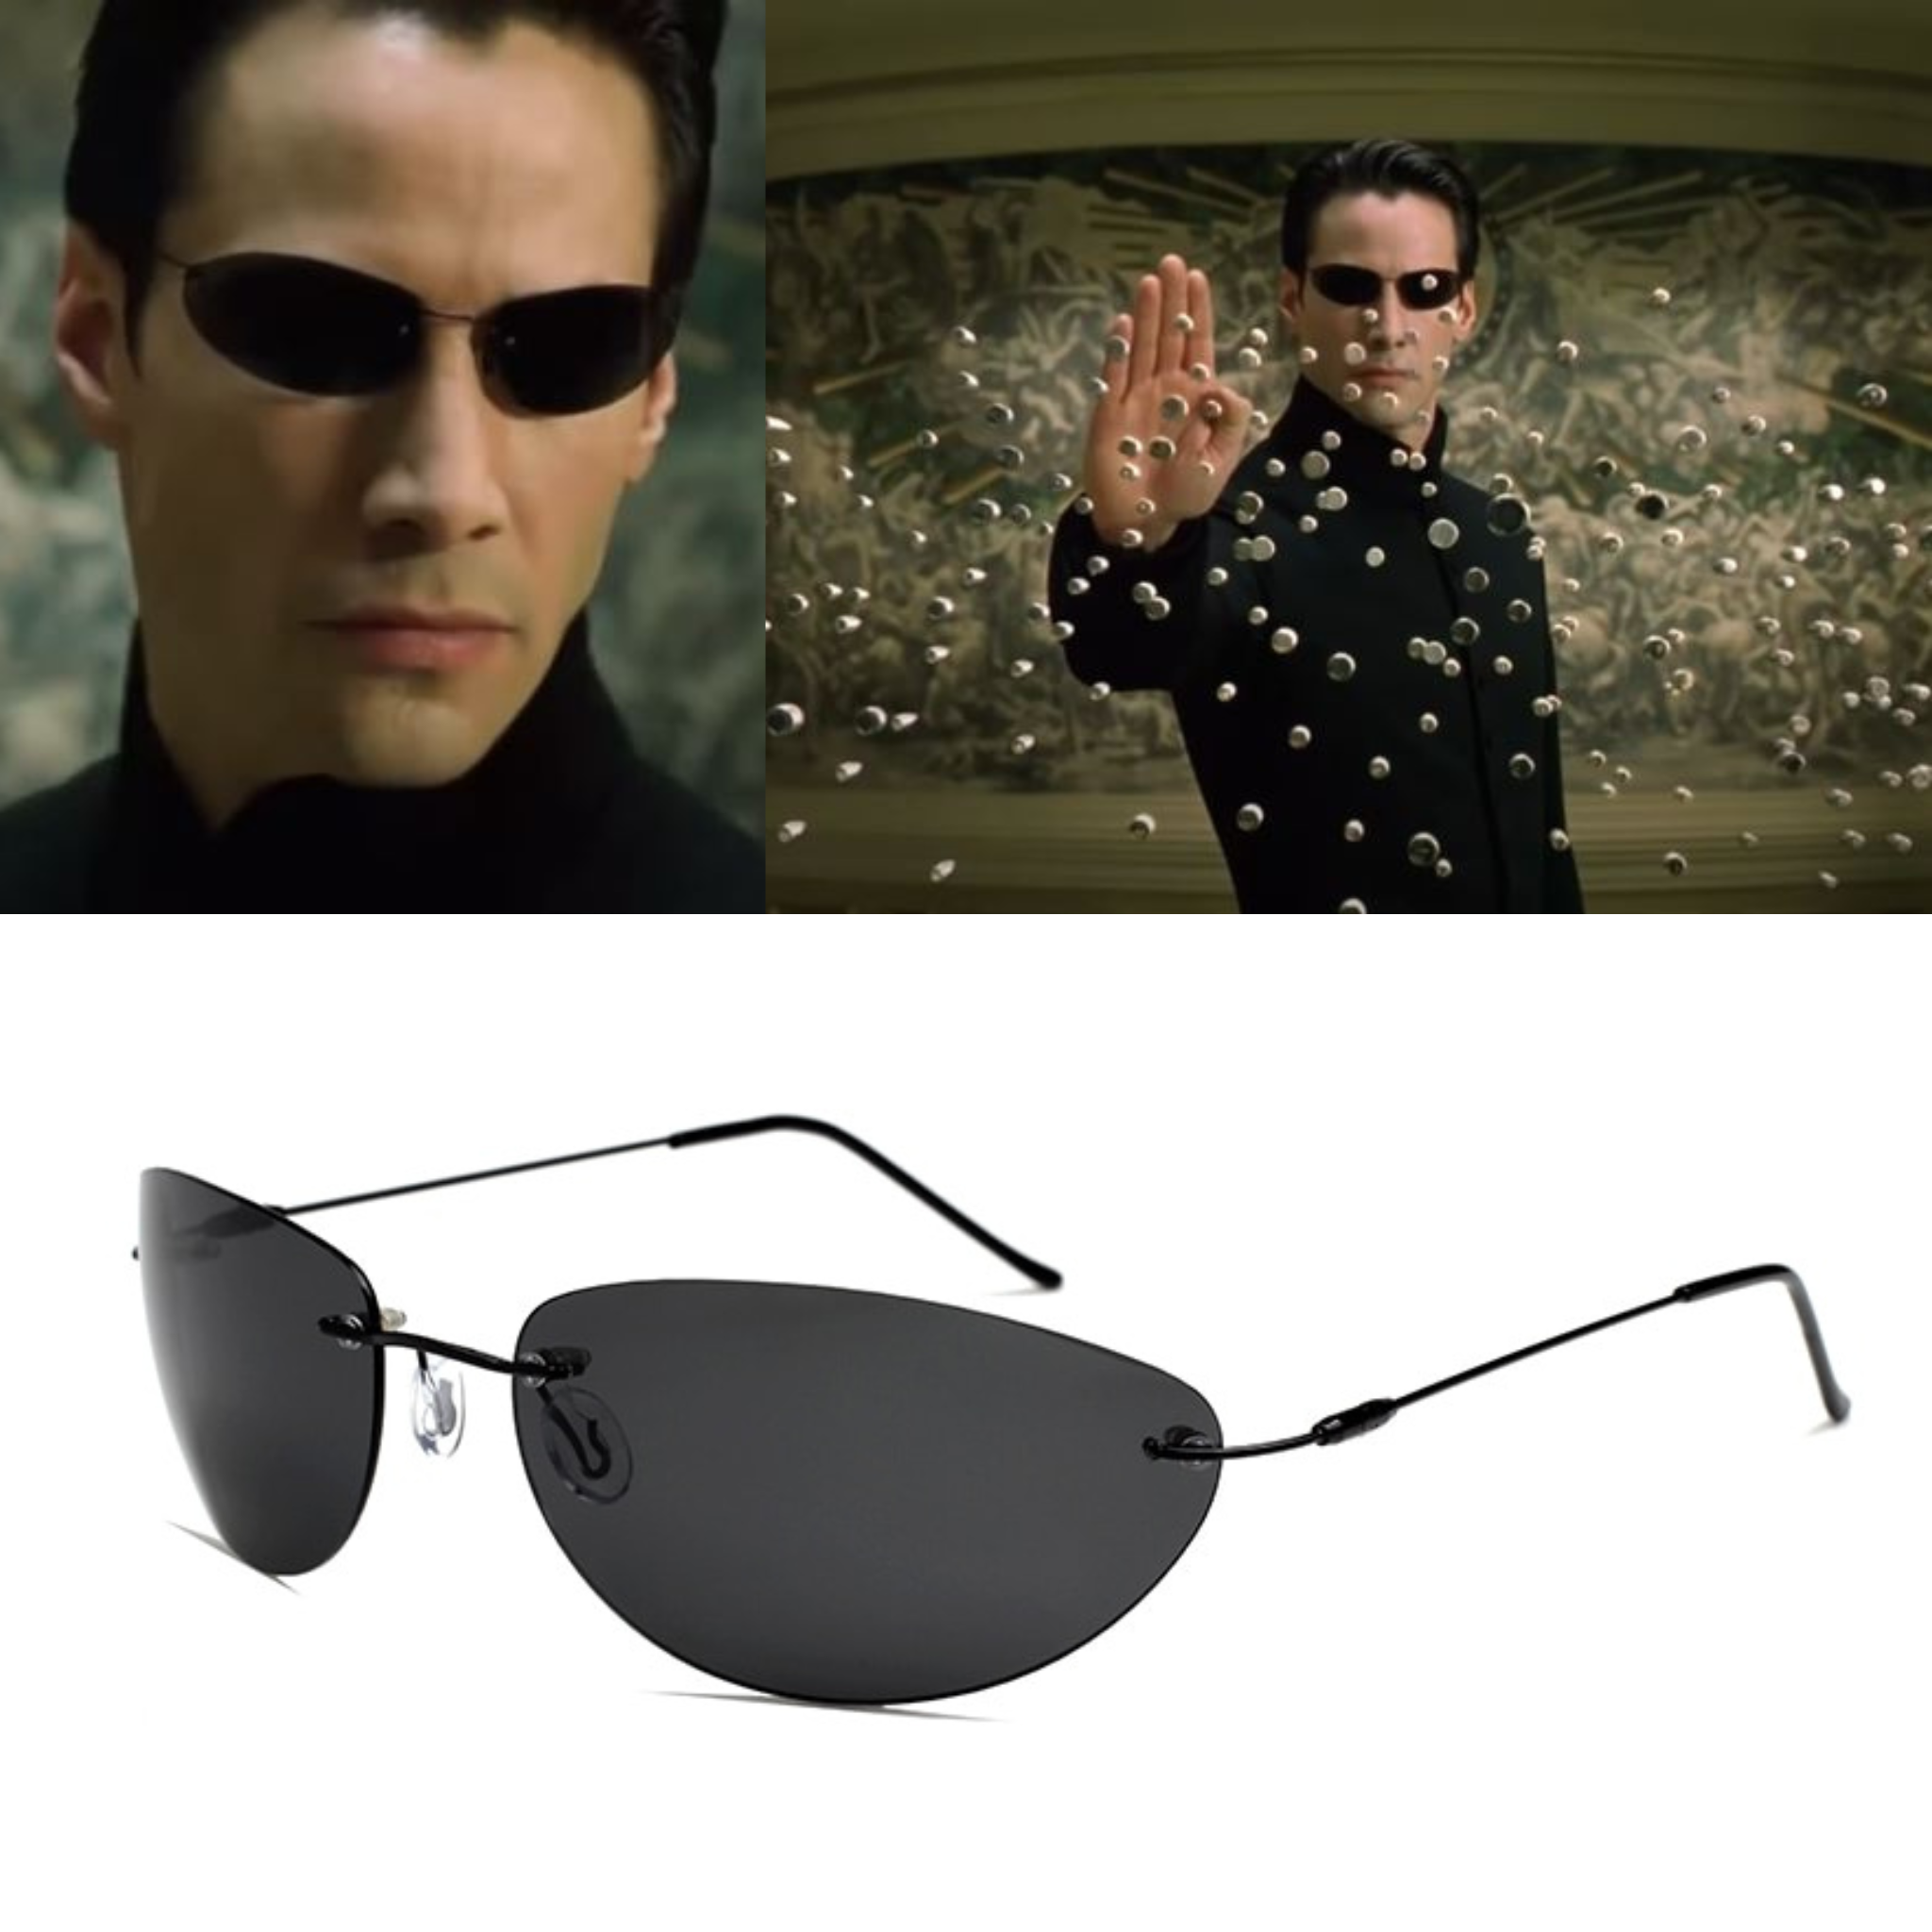 Neo vs Agents | The Matrix Reloaded [Open Matte] - YouTube